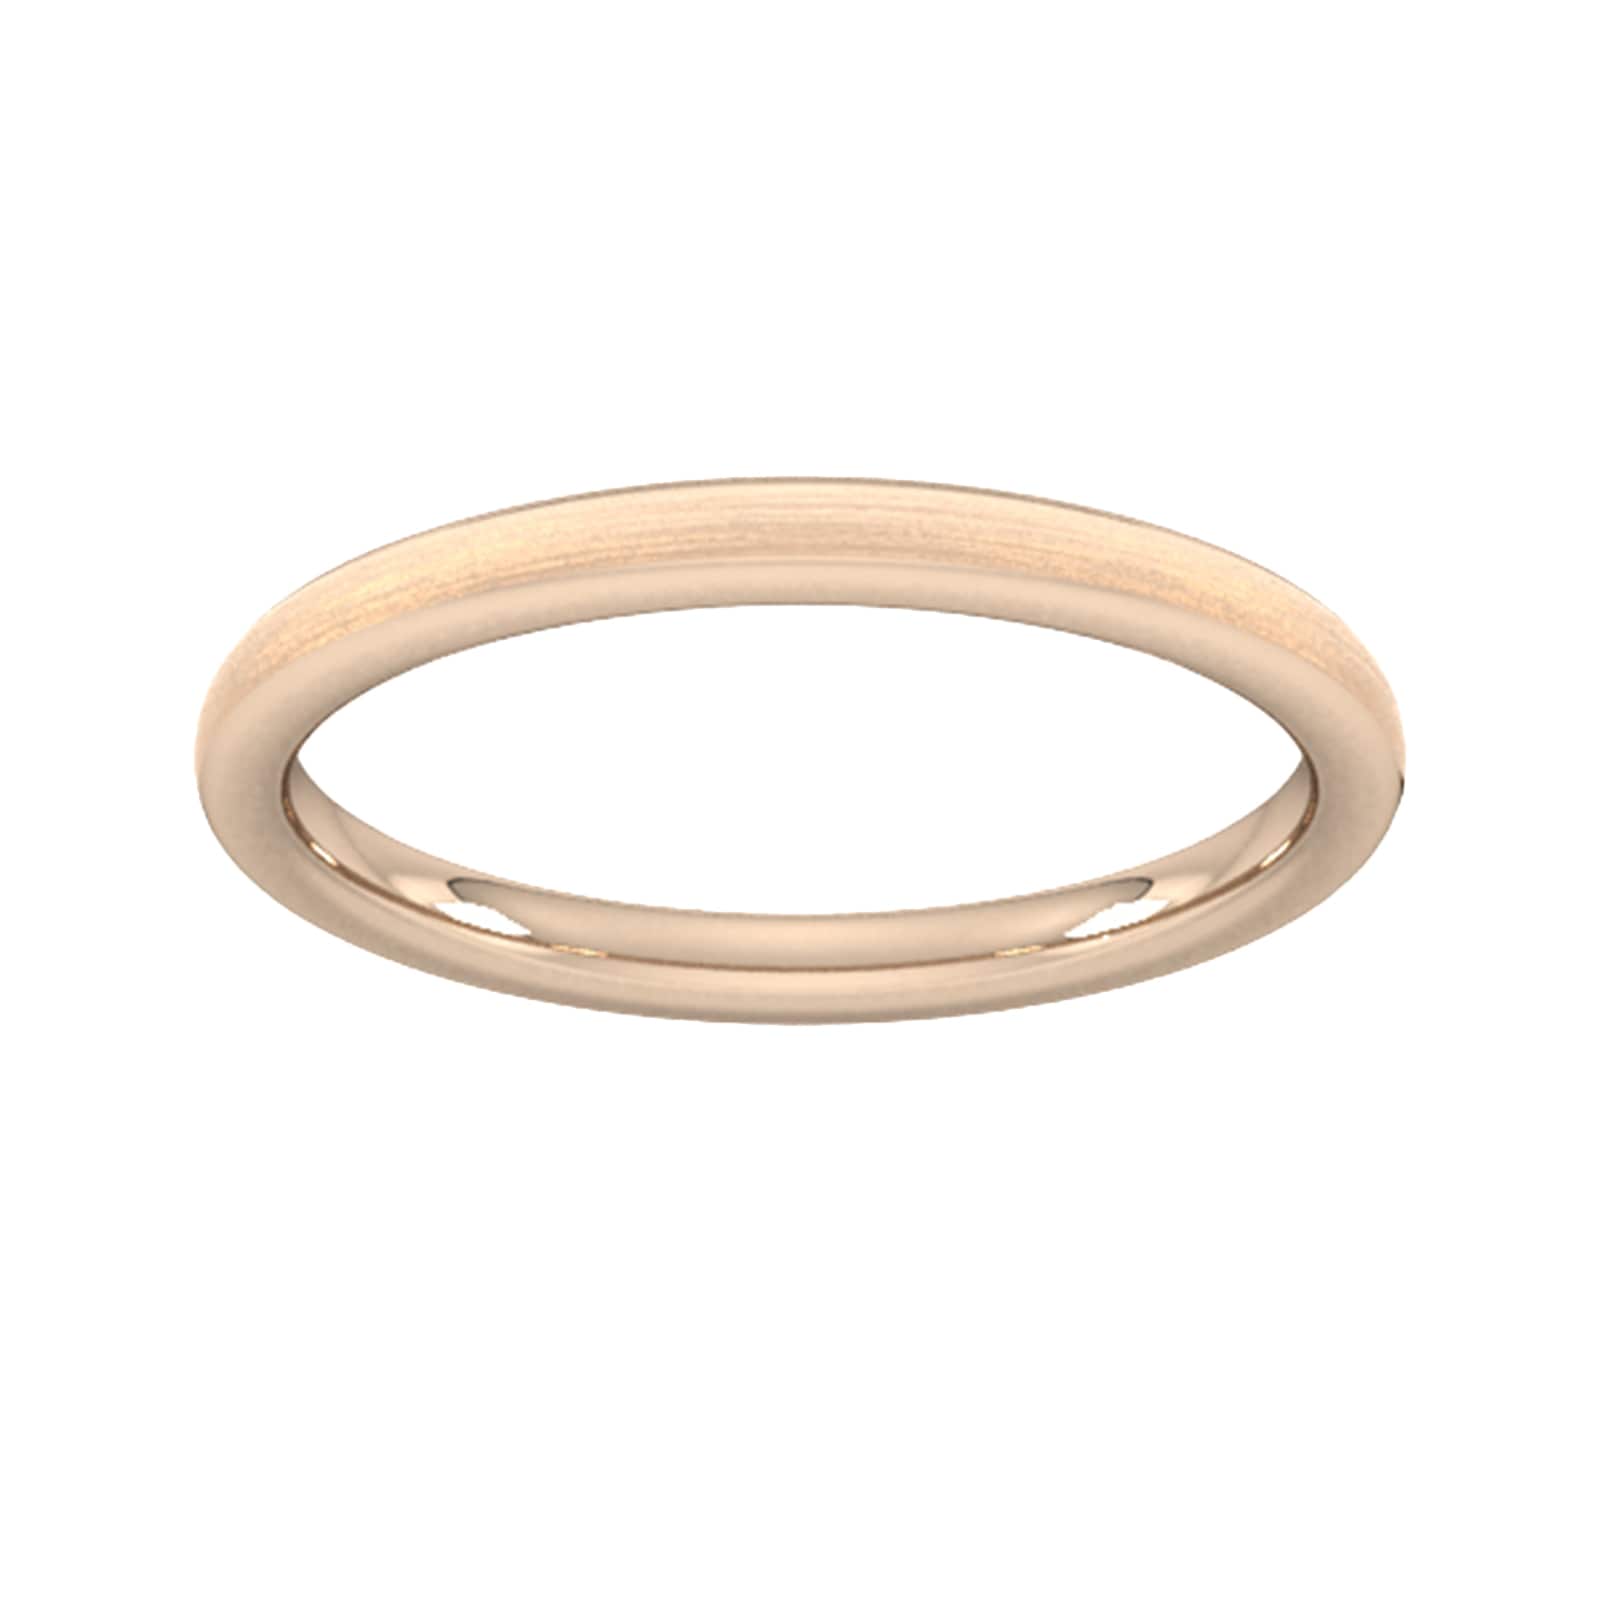 2mm Slight Court Standard Matt Finished Wedding Ring In 18 Carat Rose Gold - Ring Size R